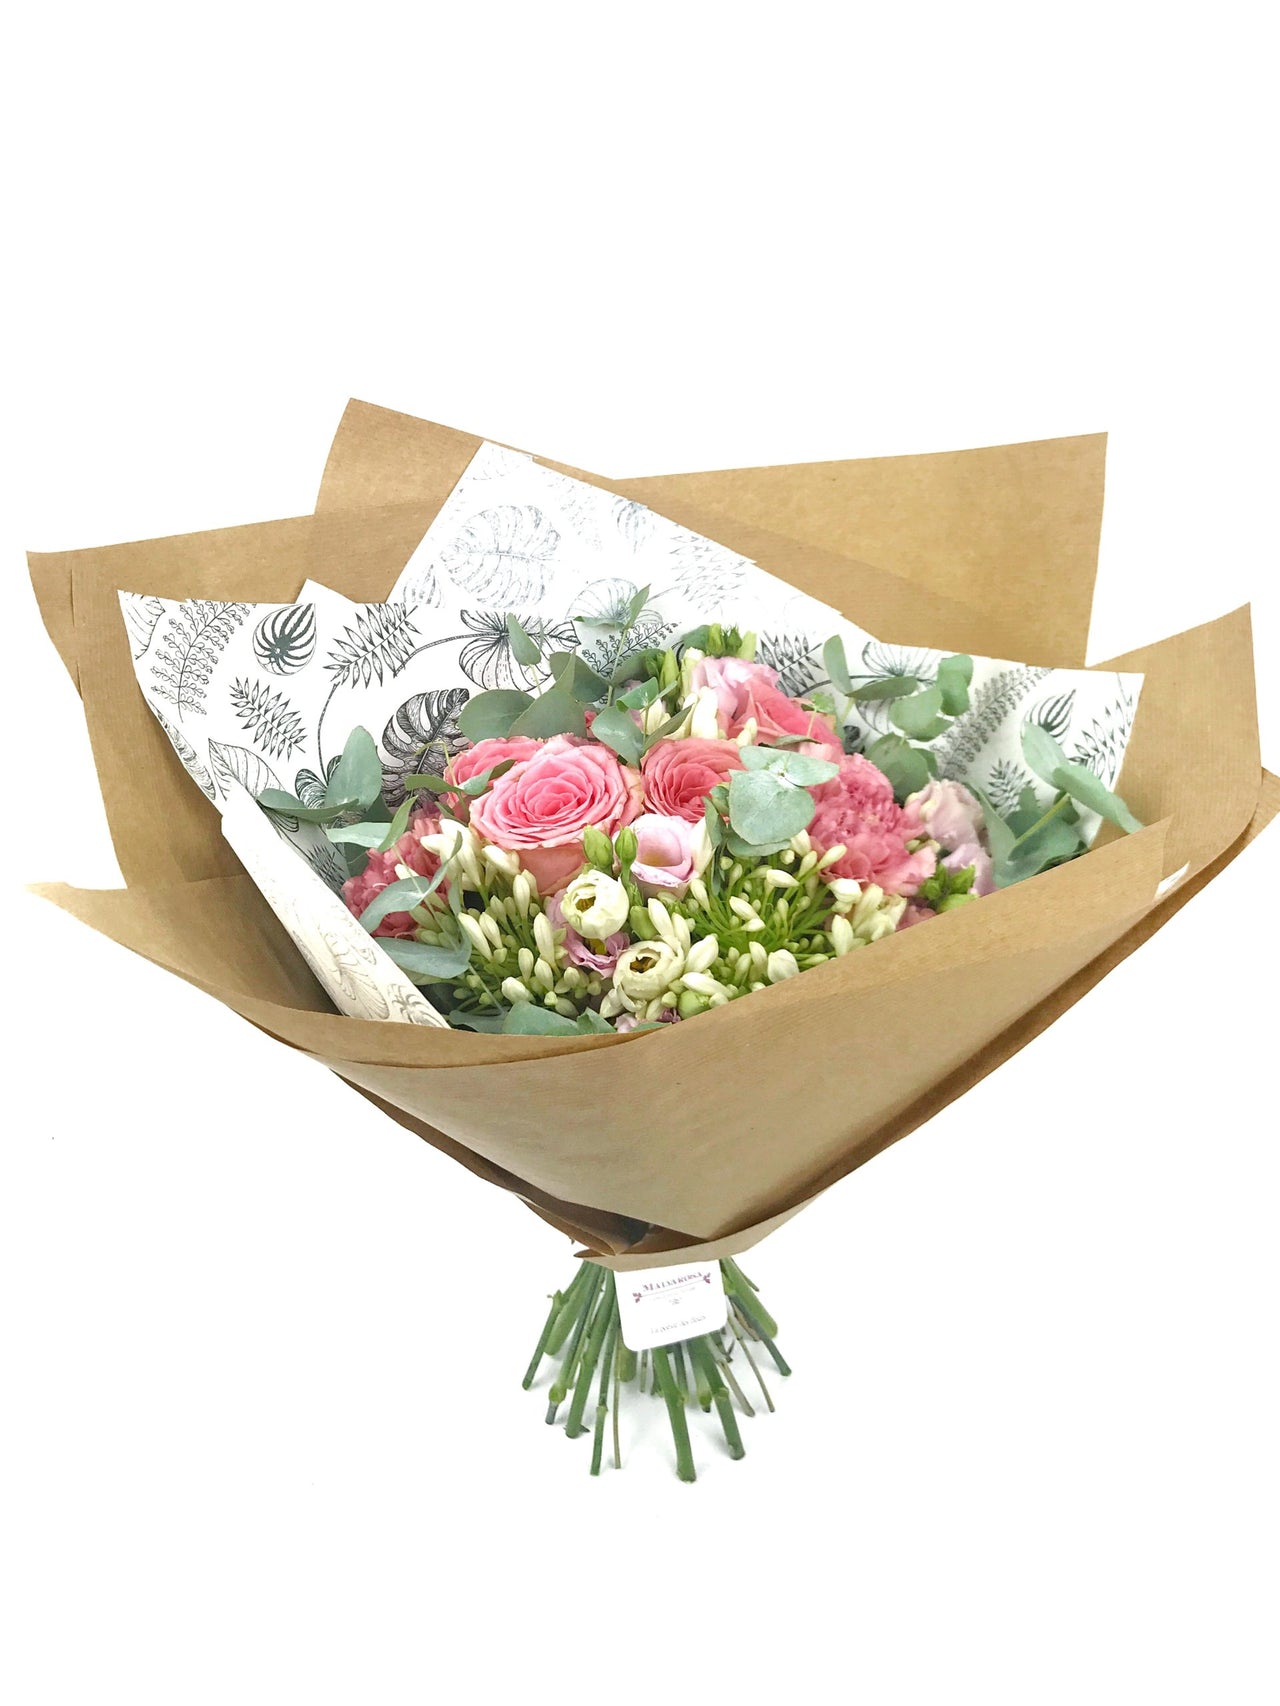 Sending flowers for birthday - Large pink 